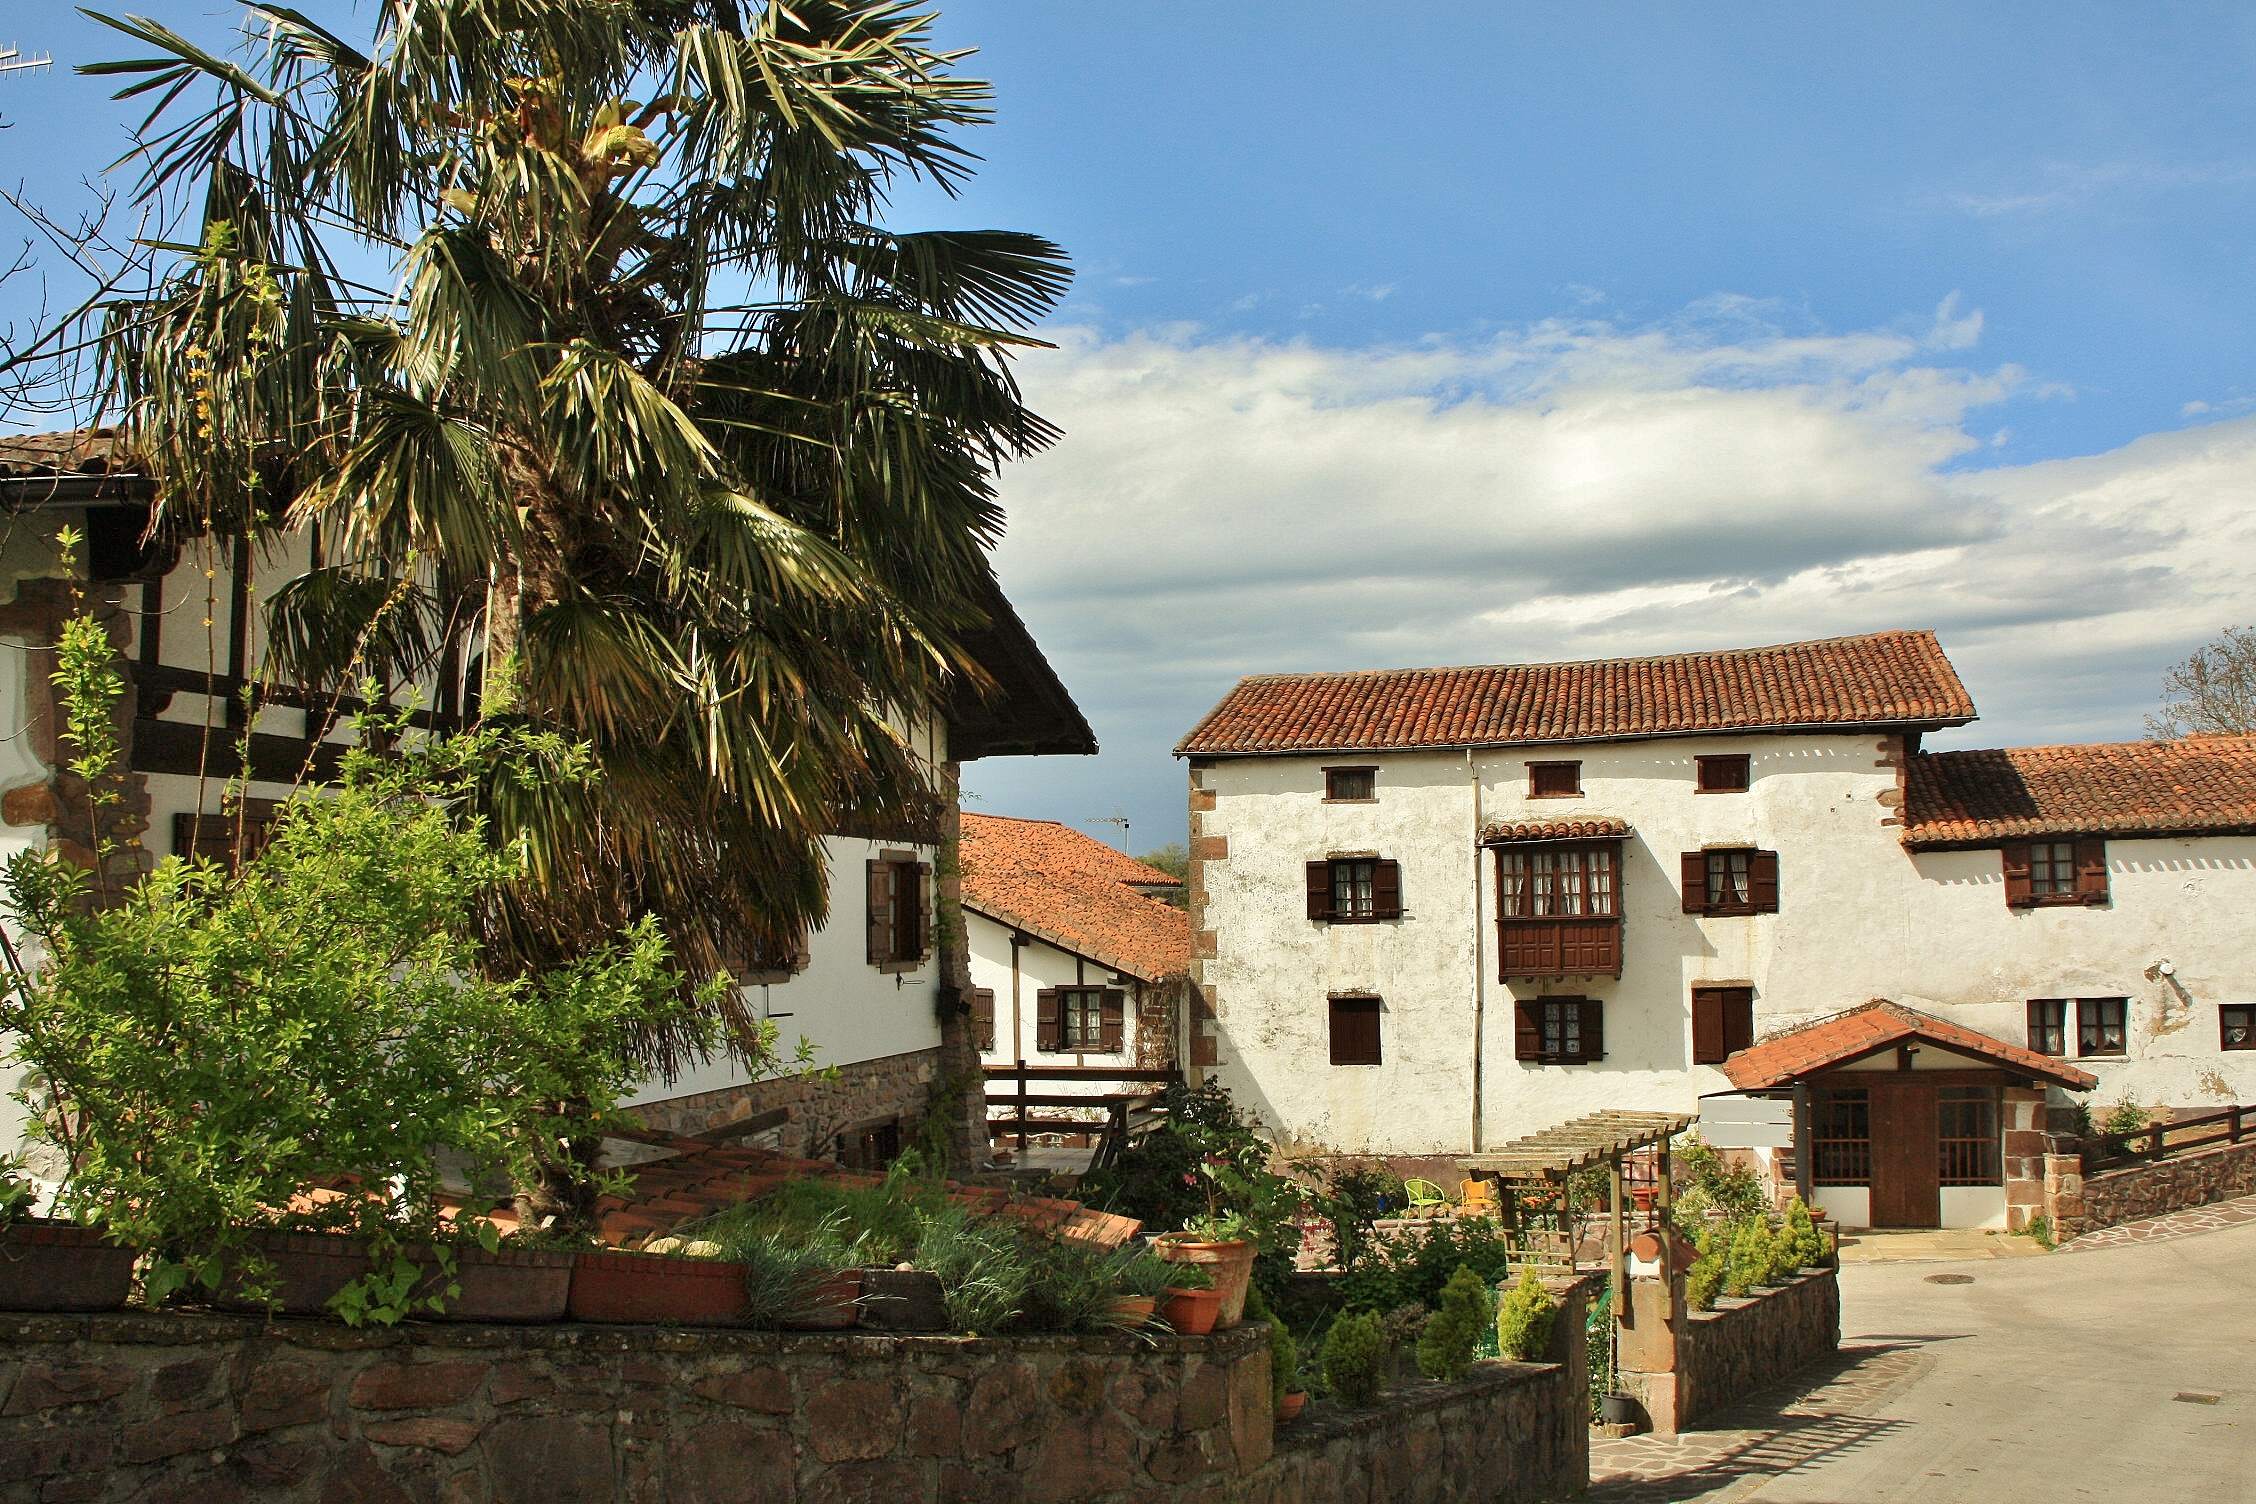 Foto: Centro histórico - Zugarramurdi (Navarra), España